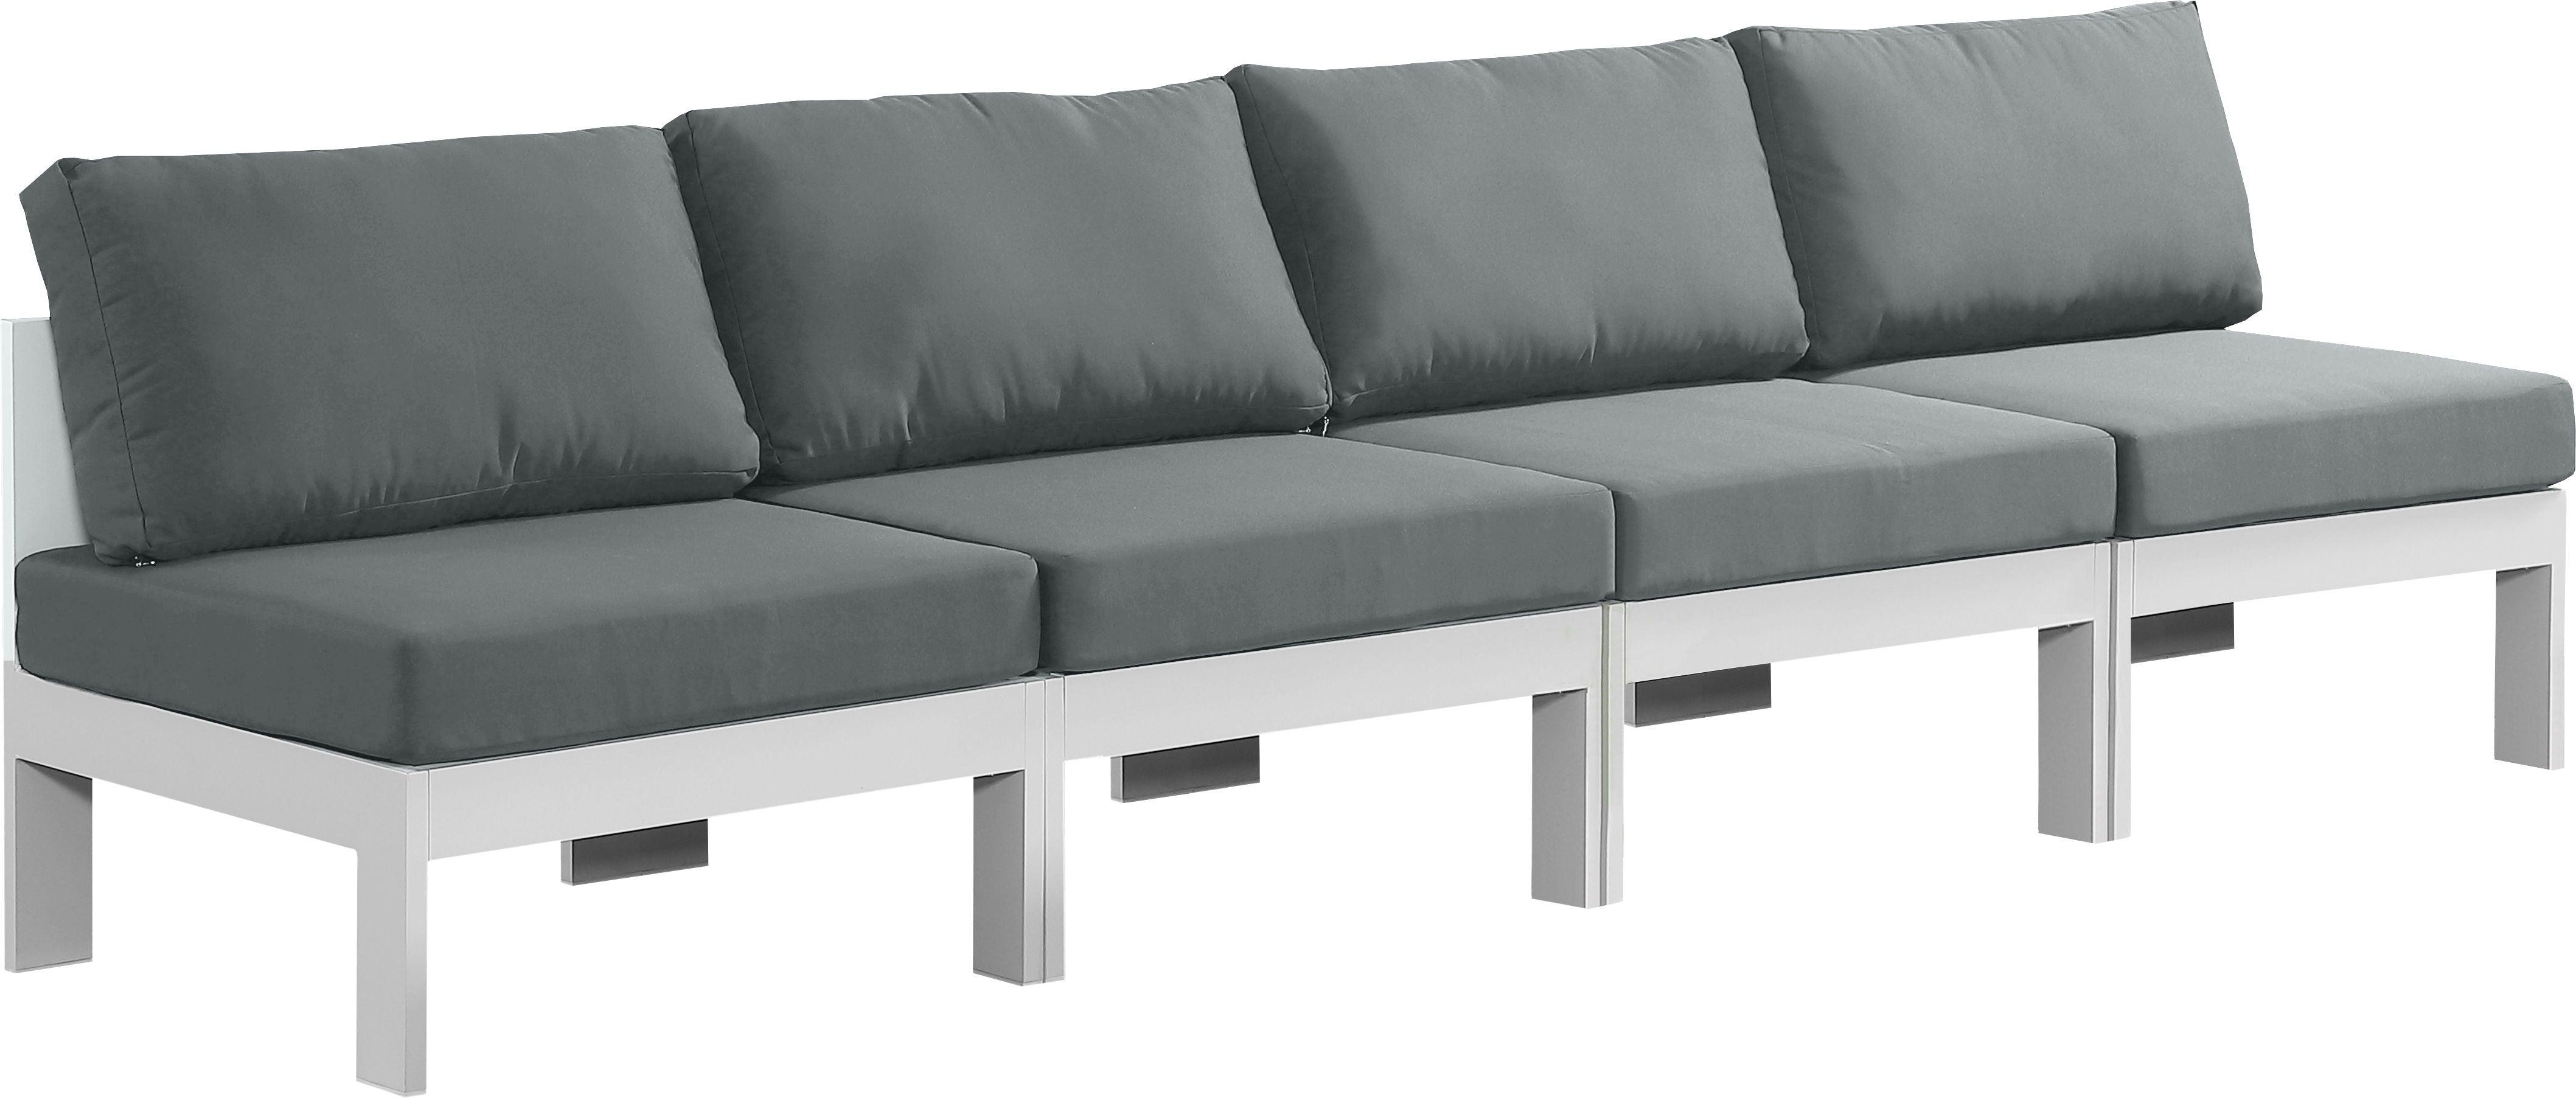 Meridian Furniture - Nizuc - Outdoor Patio Modular Sofa 4 Seats - Grey - 5th Avenue Furniture